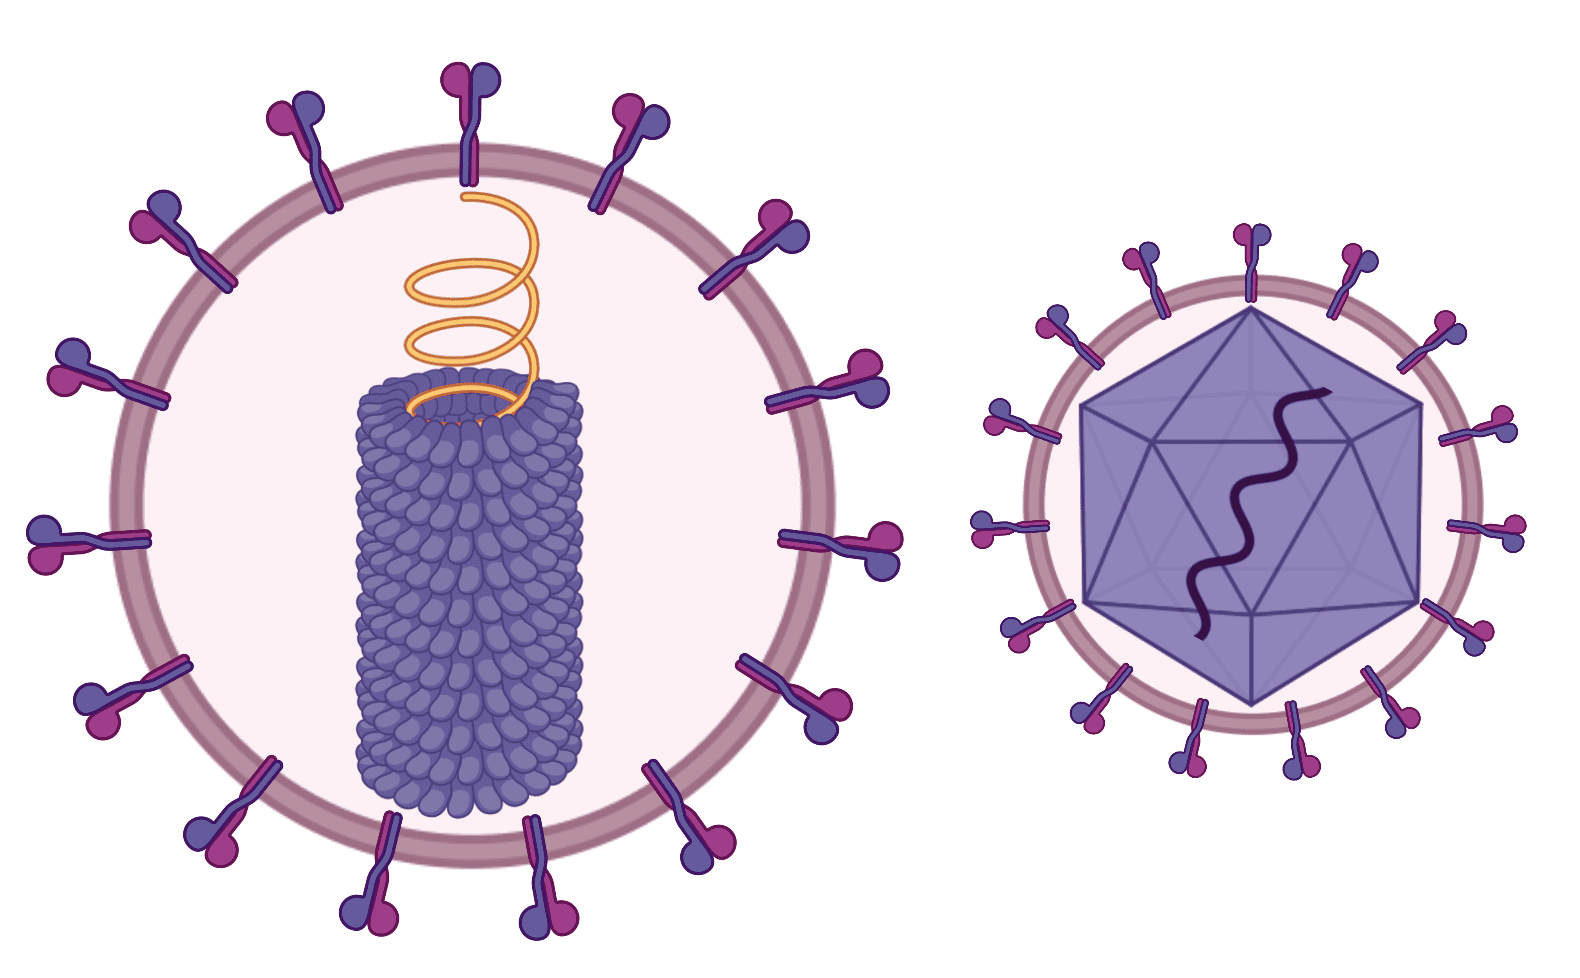 virus diagram capsid